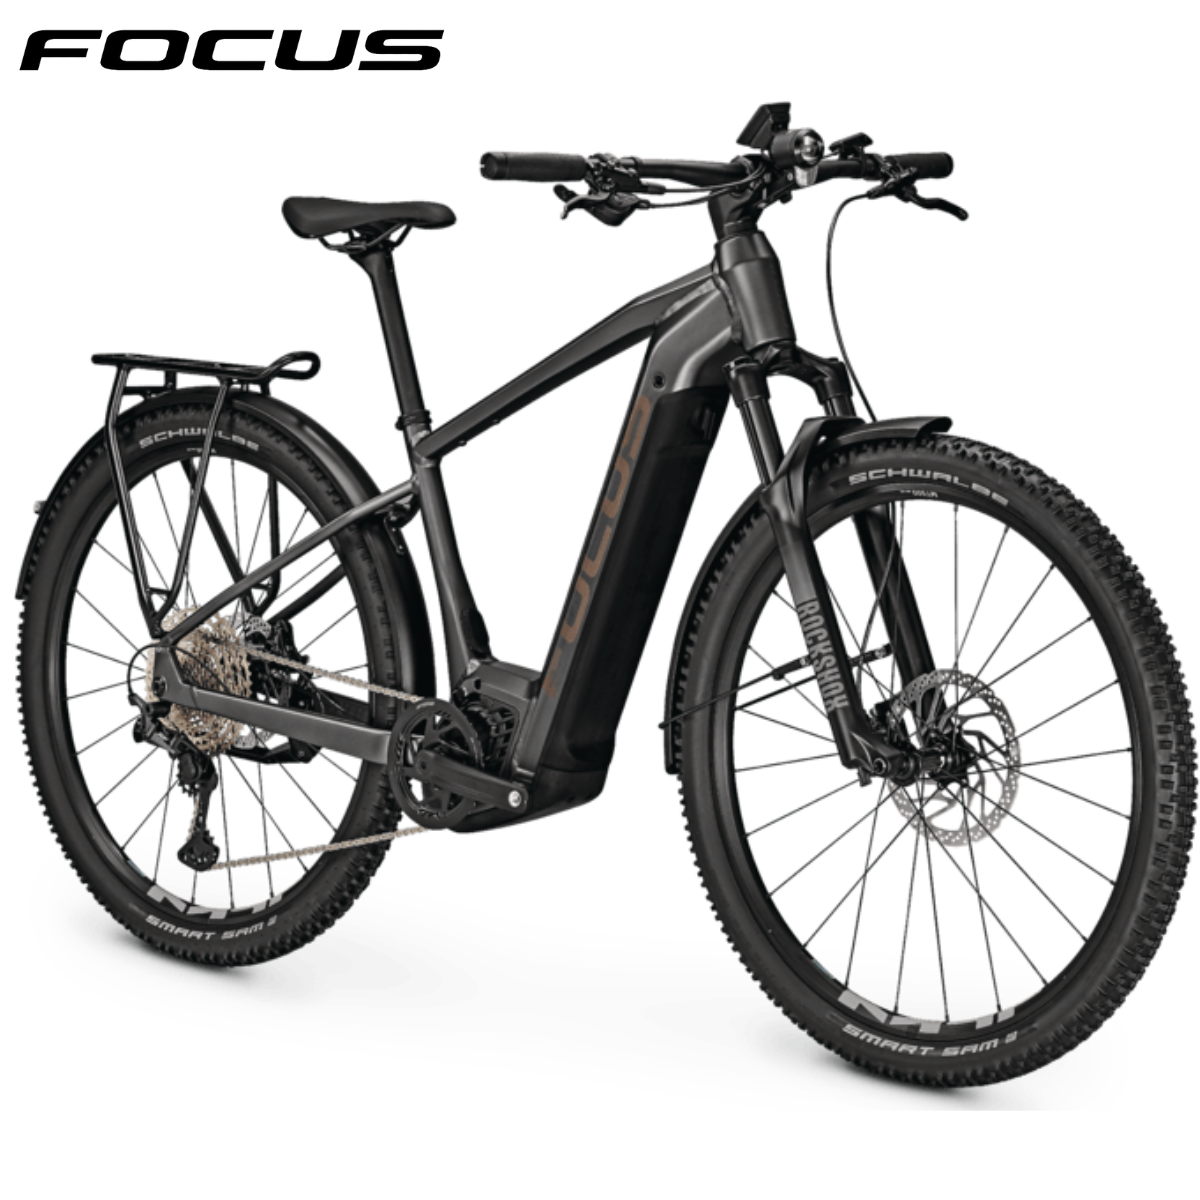 FOCUS Aventura² 6.9 Electric Mountain Bike